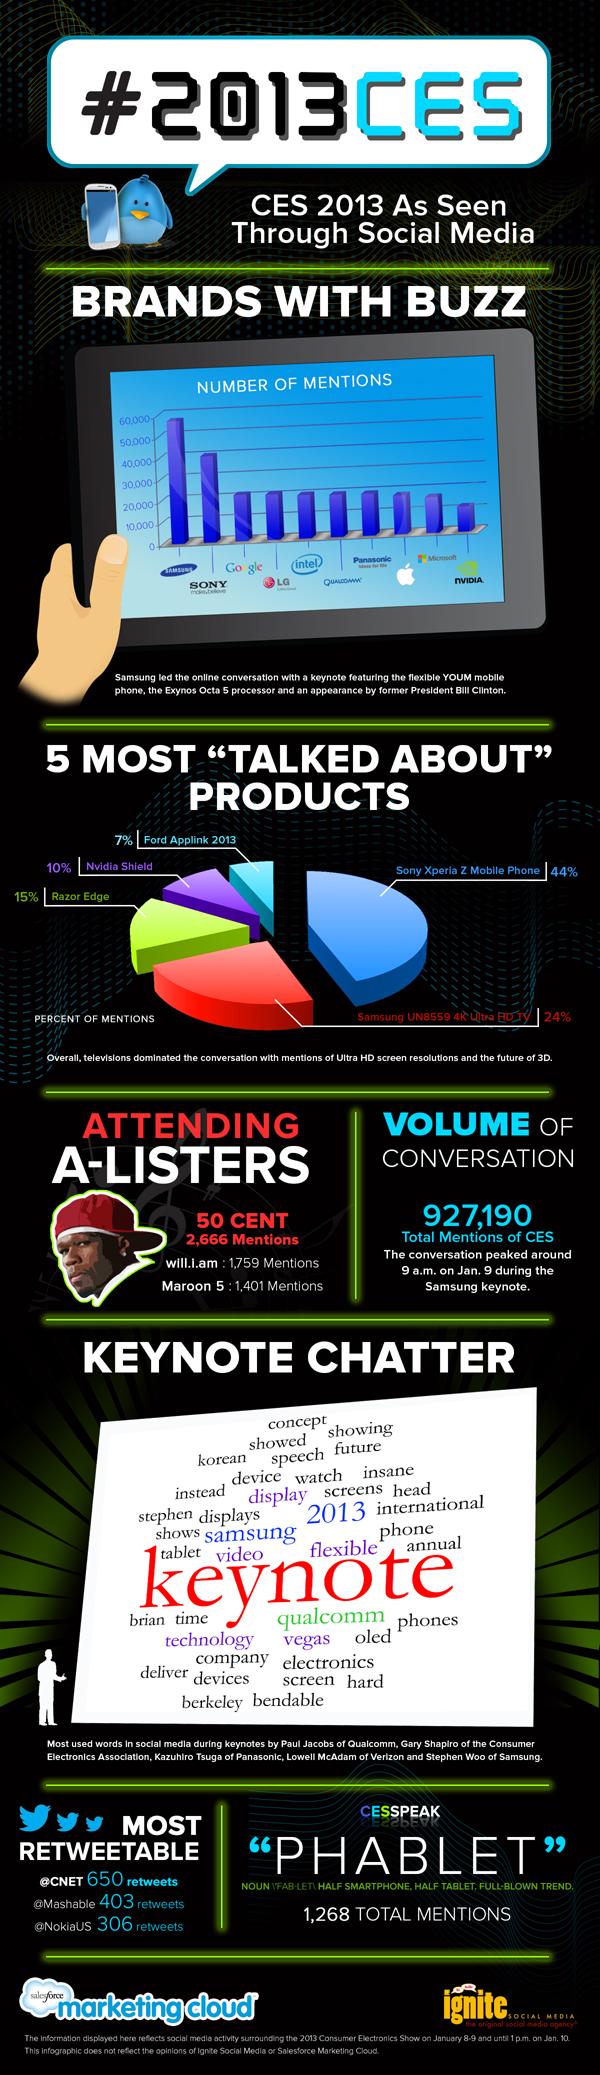 CES 2013 Infographic